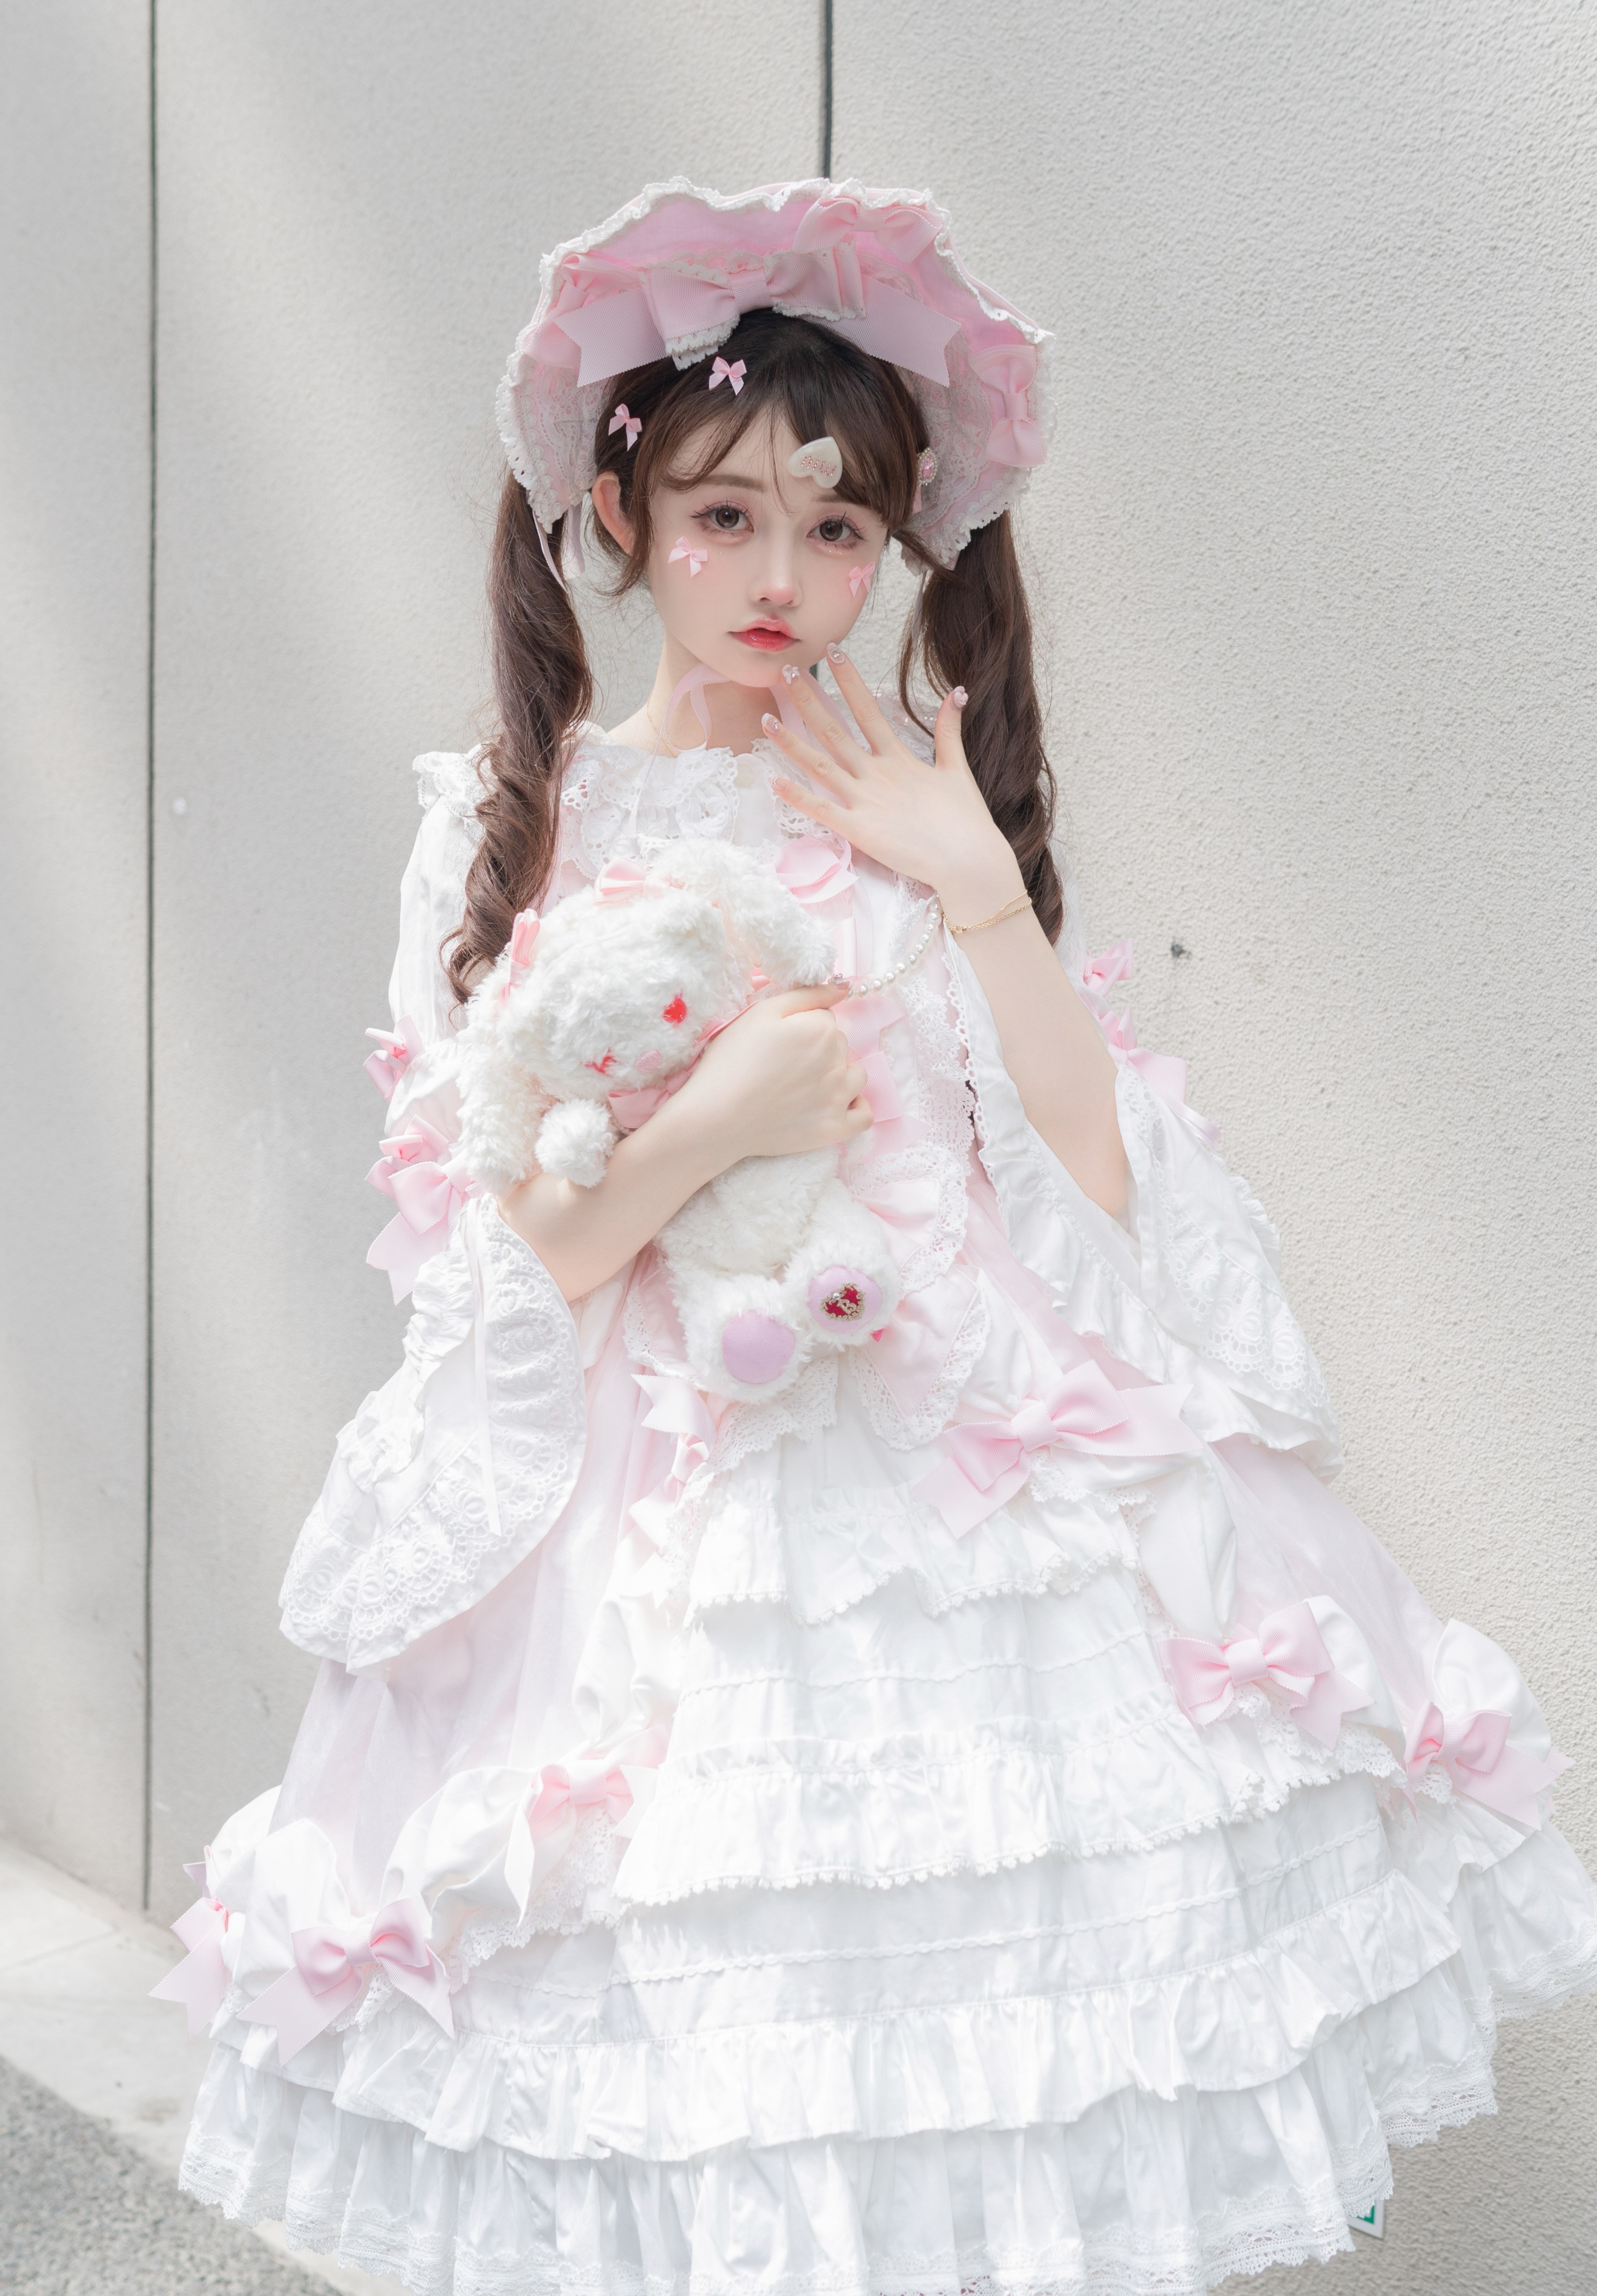 Asian Pink Hat White Dress 3459x4974